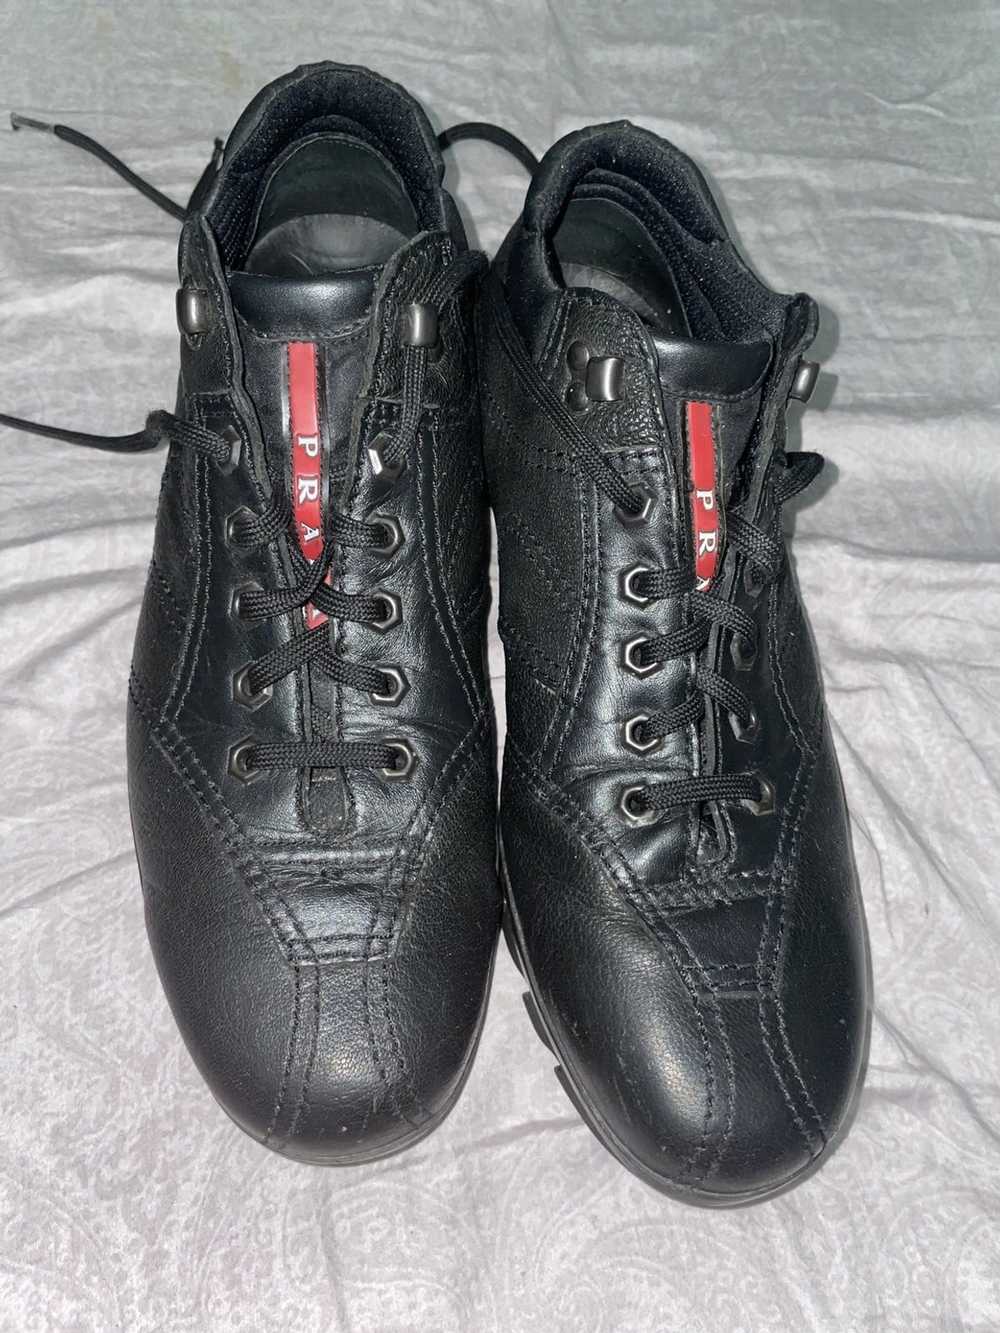 Prada Prada black leather half boot - image 1